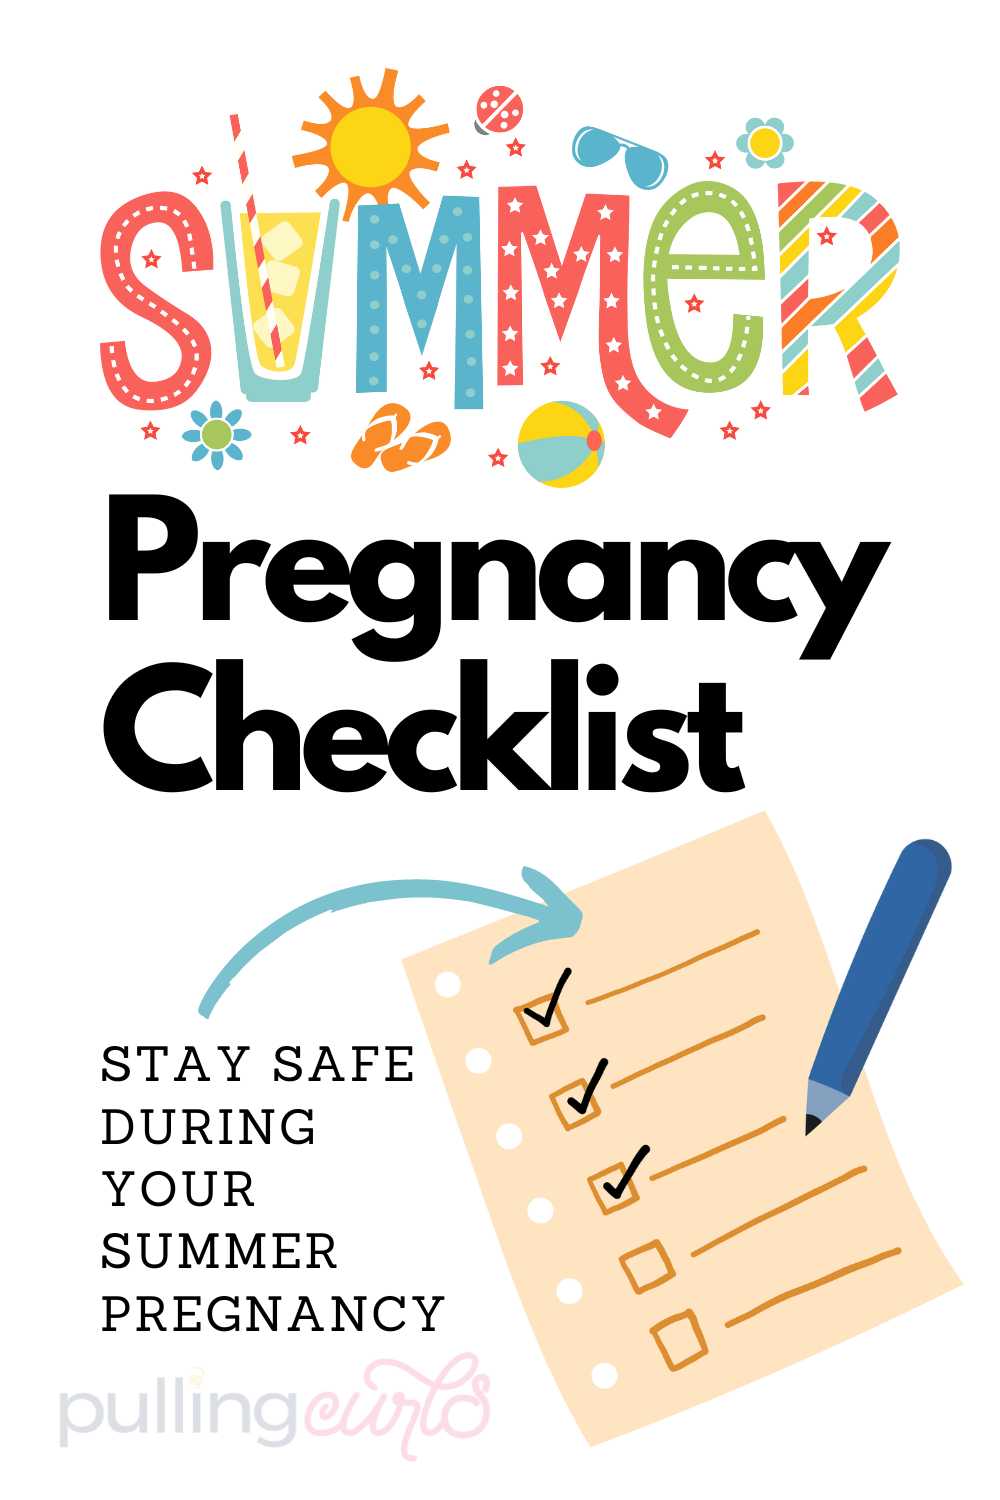 Summer pregnancy checklist / stay safe during your summer pregnancy / image of a checklist via @pullingcurls